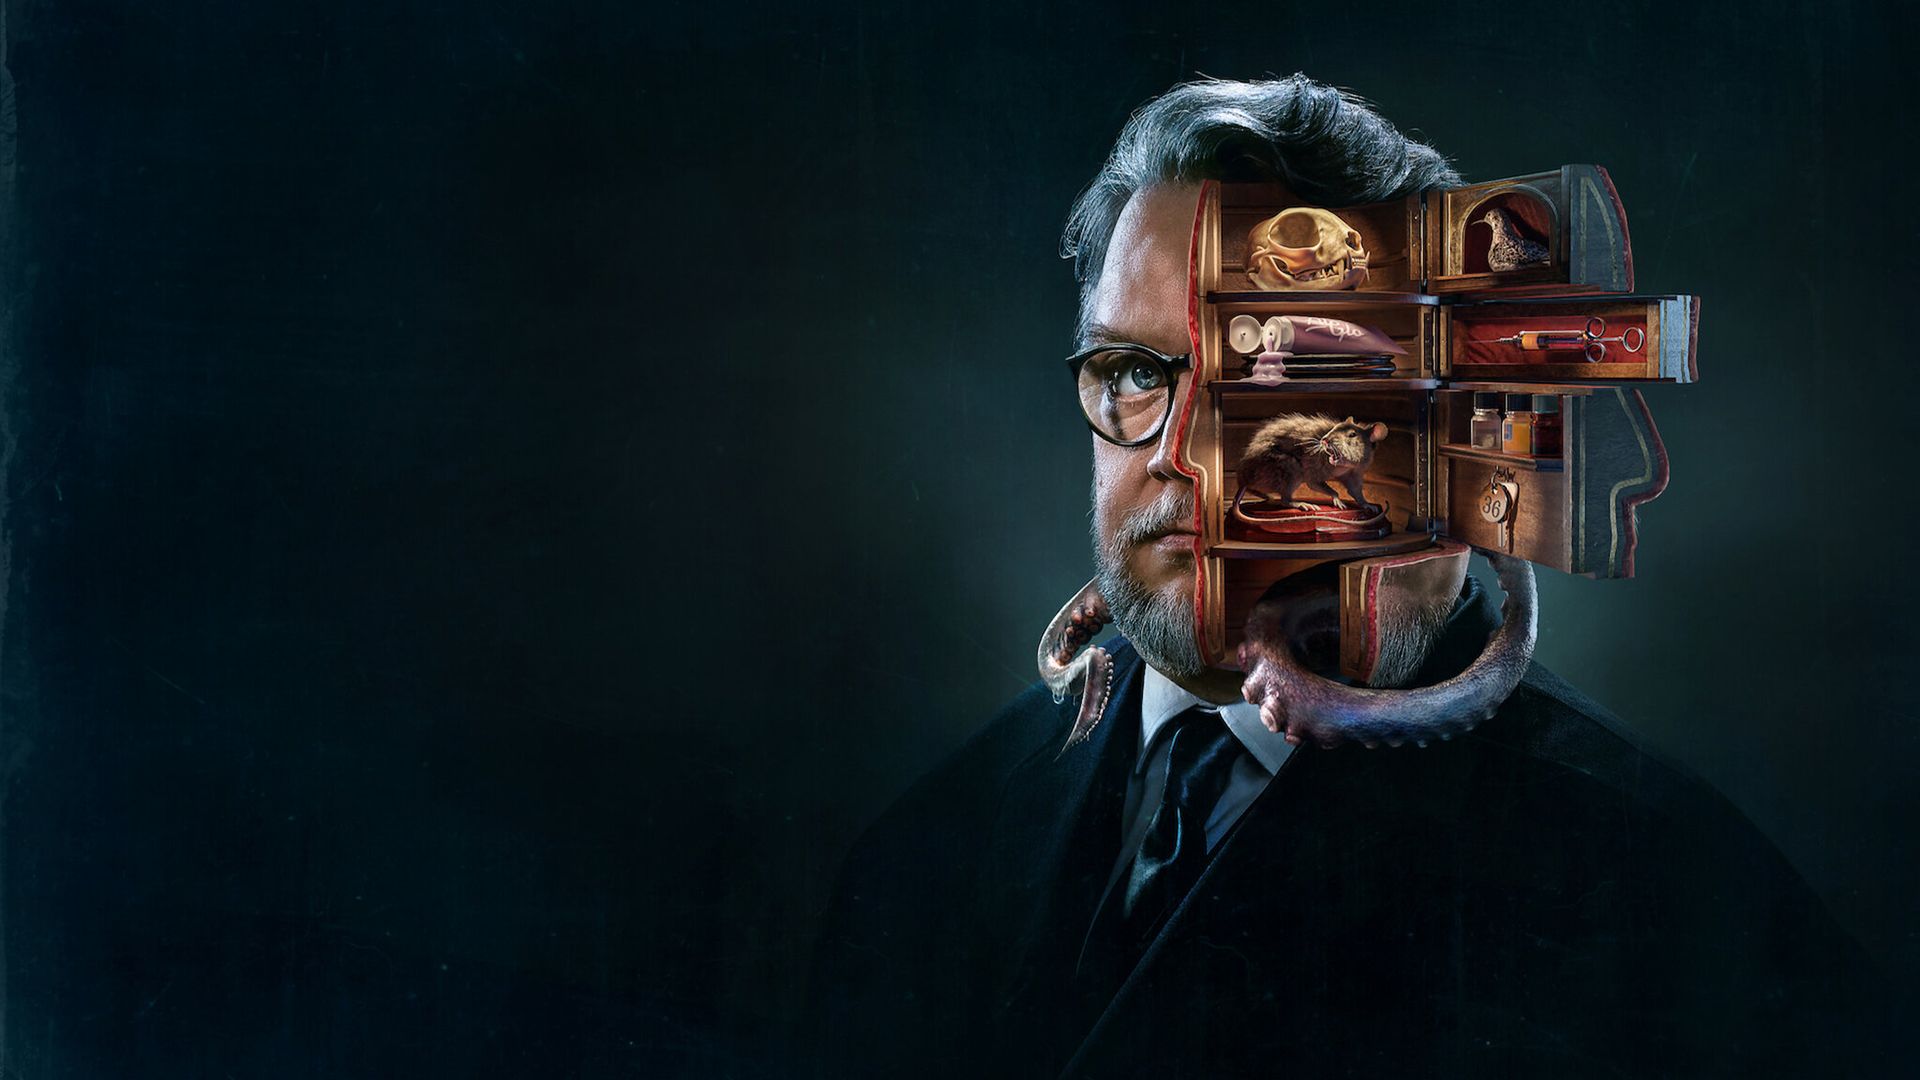 Guillermo del Toro's Cabinet of Curiosities background